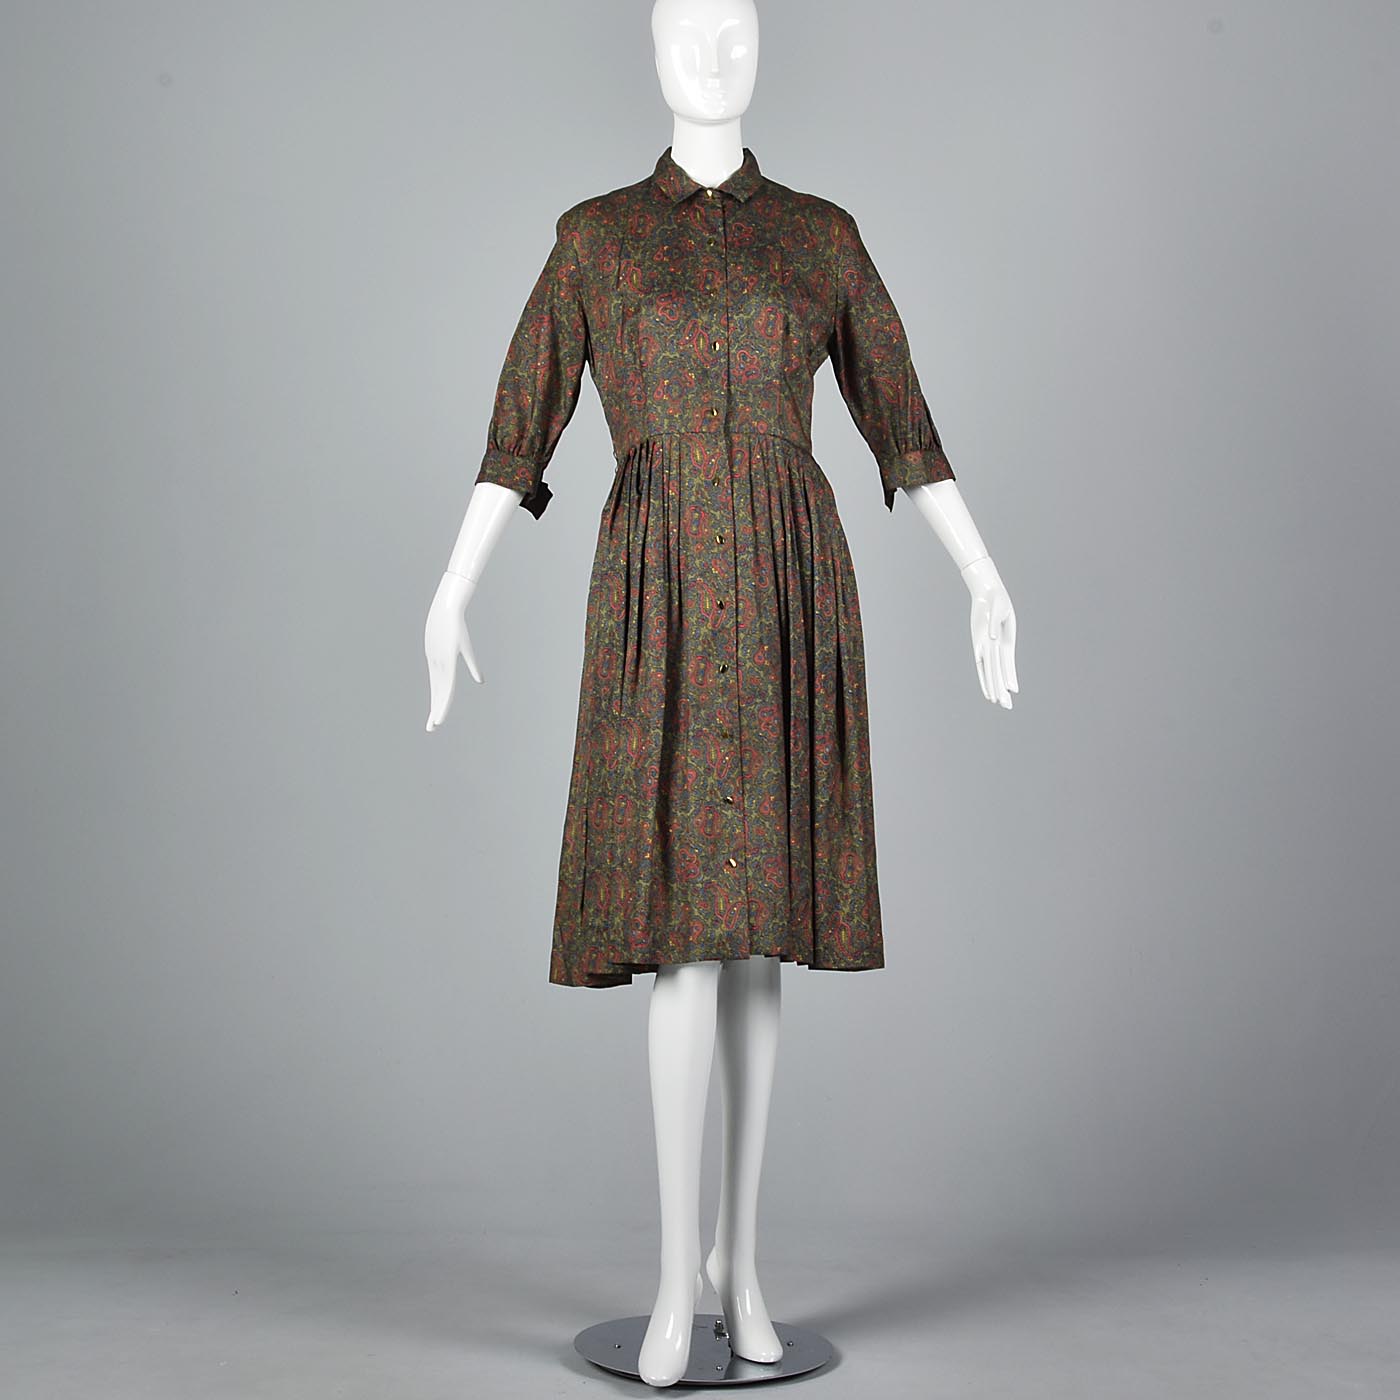 1950s Paisley Print Shirtwaist Dress